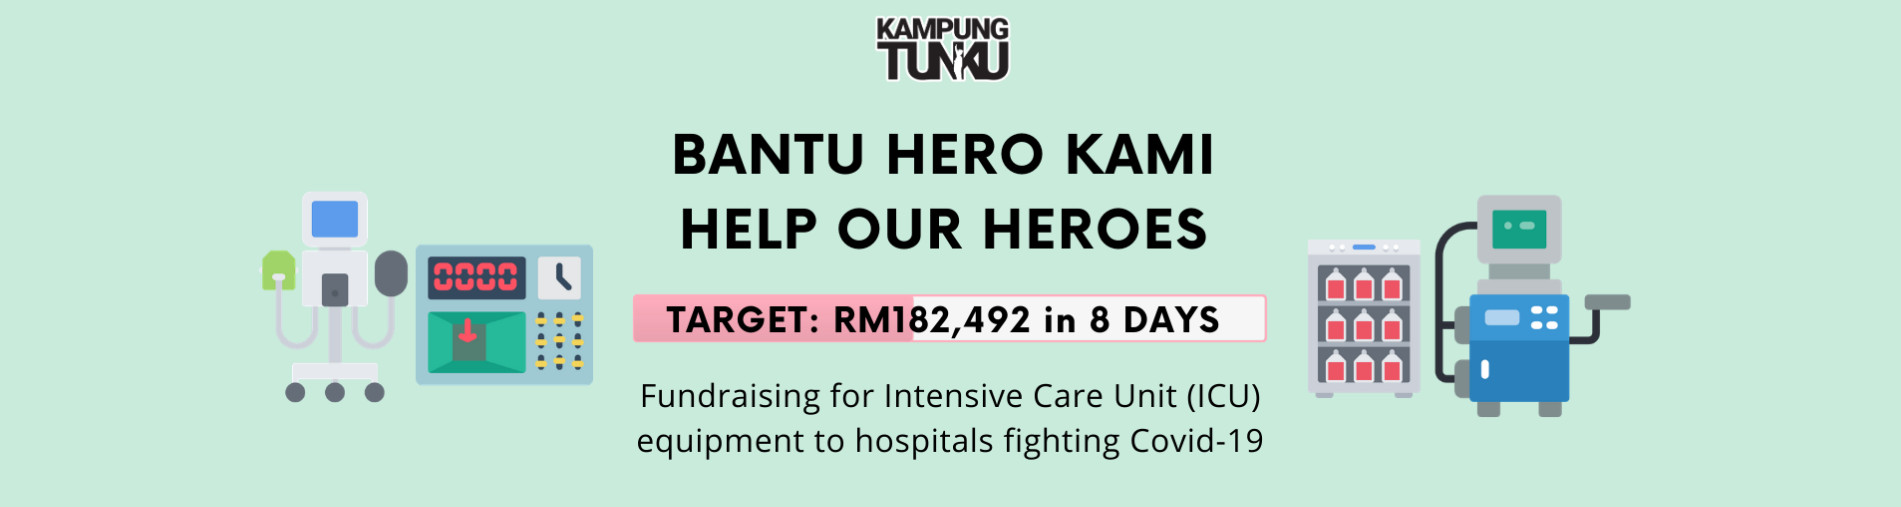 Bantu Hero Kami | Help Our Heroes: Fundraising for ICU equipment